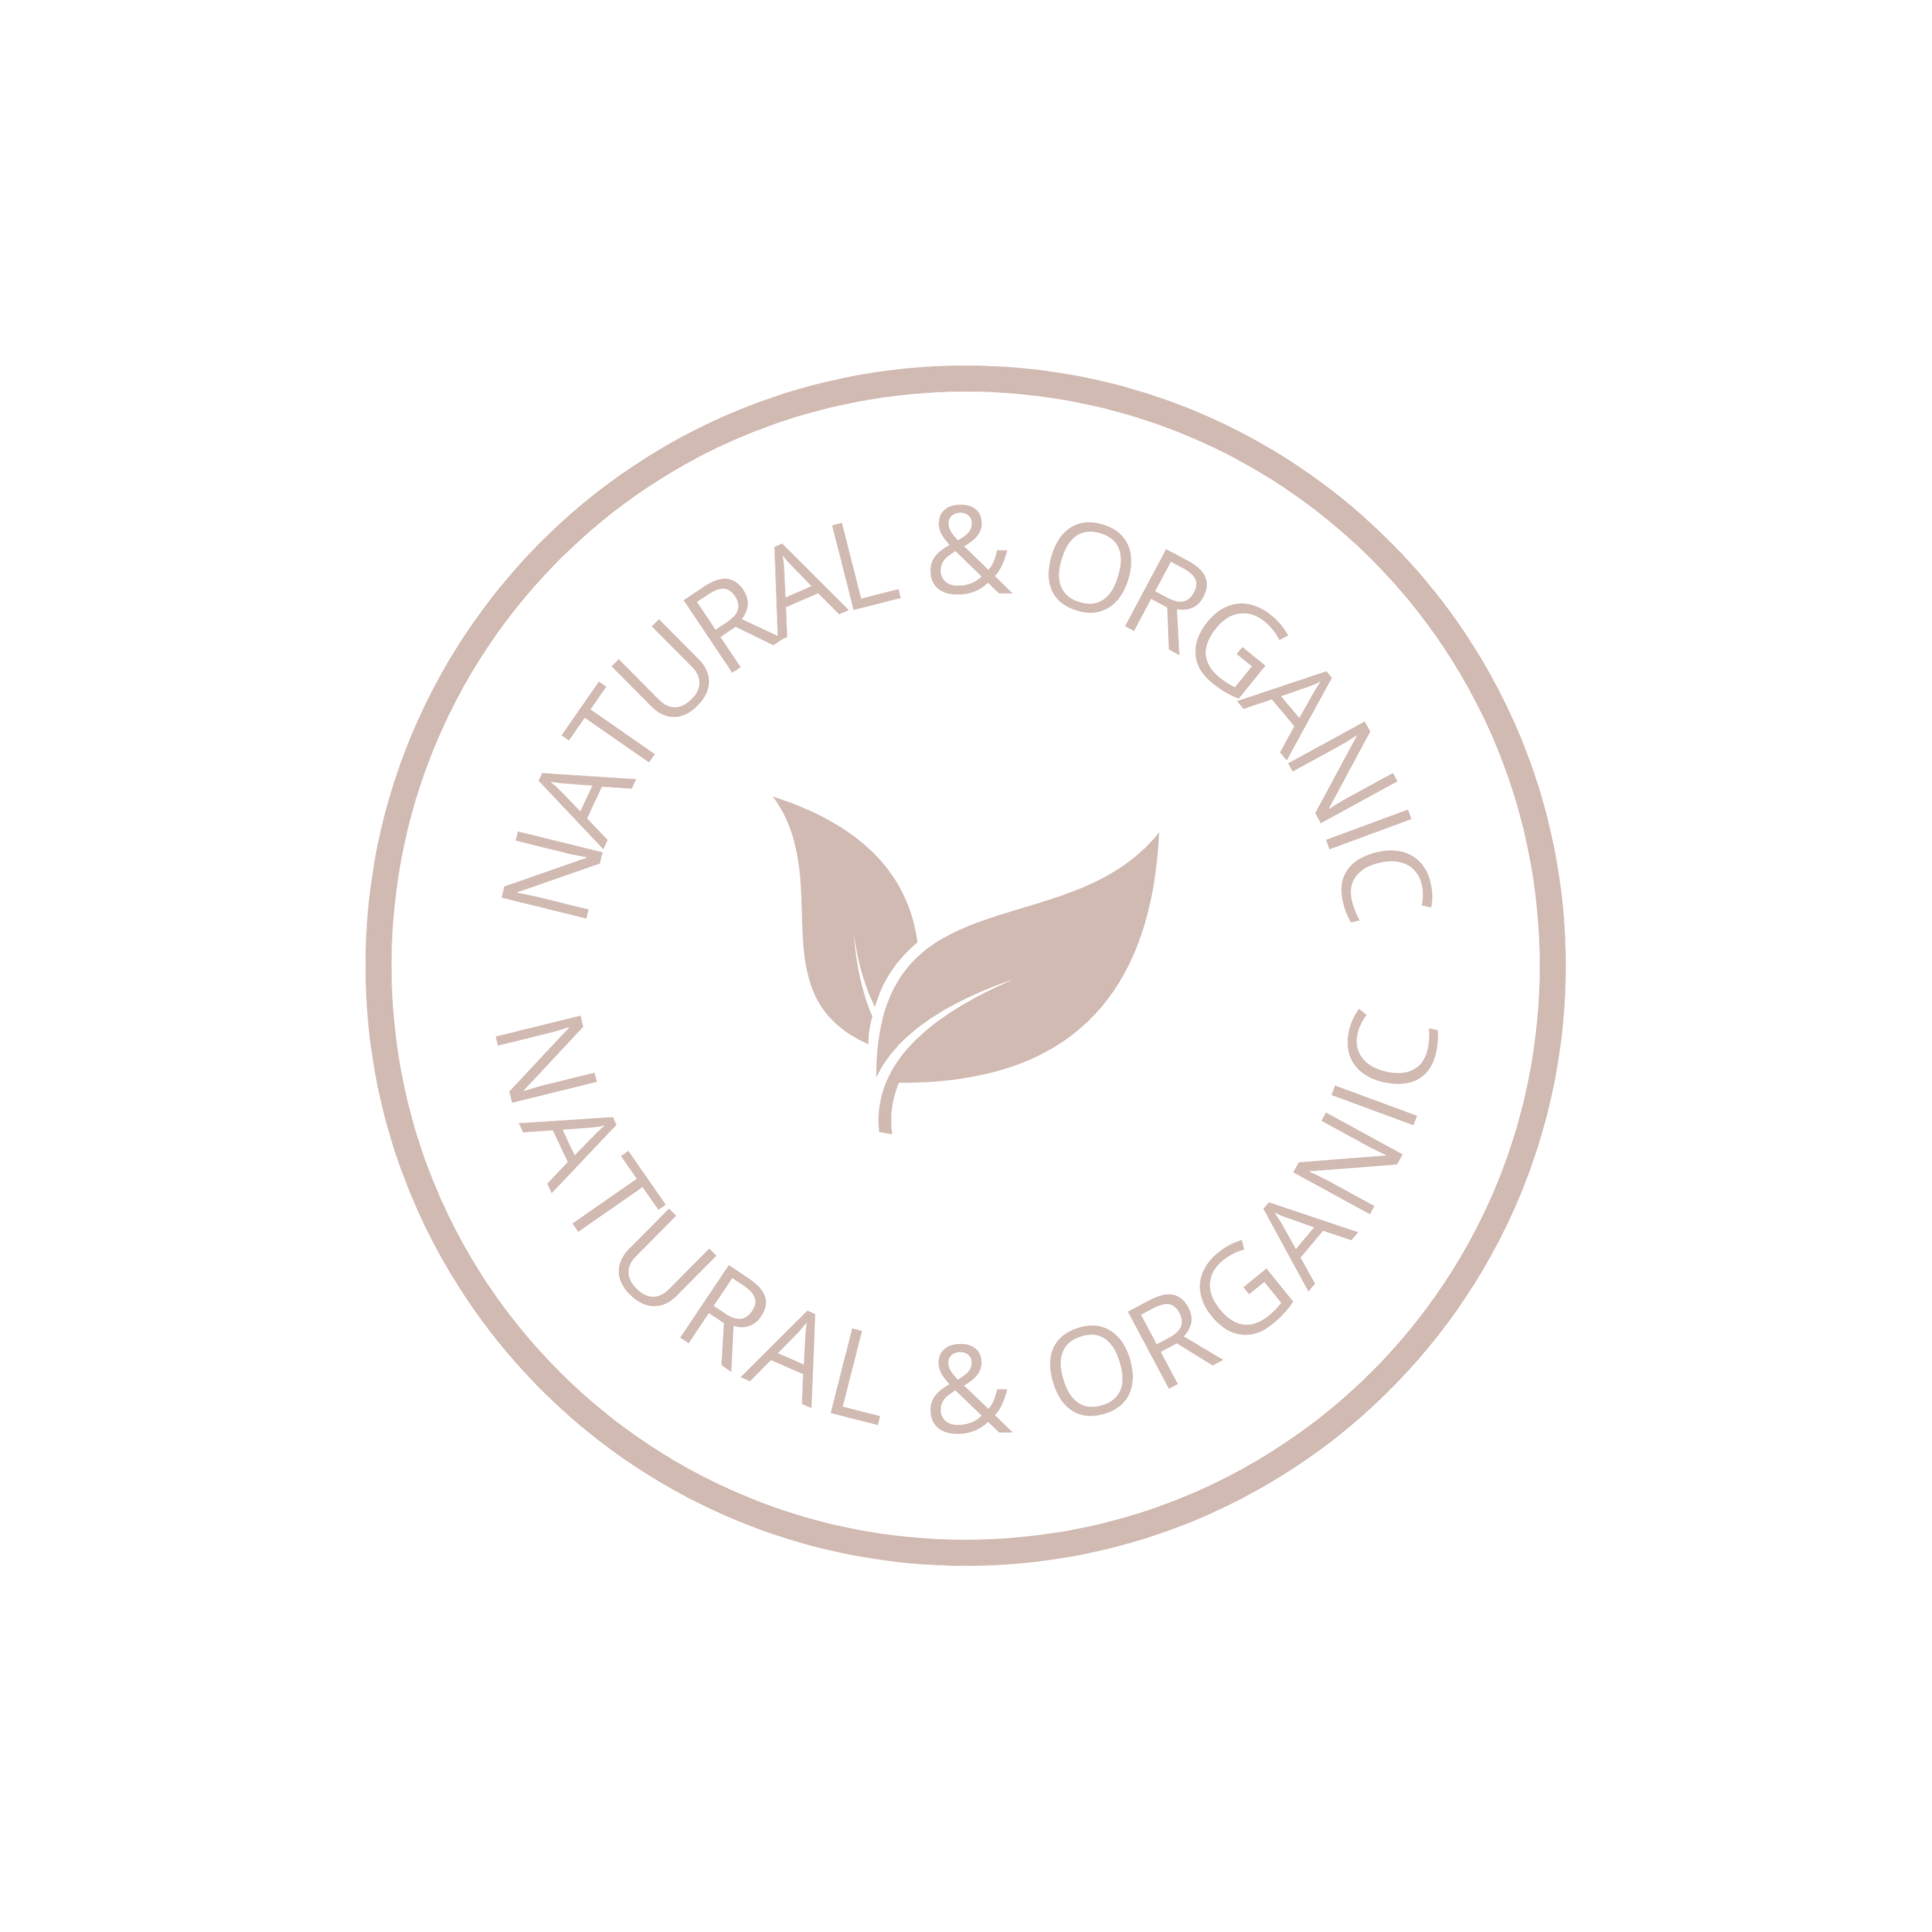 All natural ingredients logo